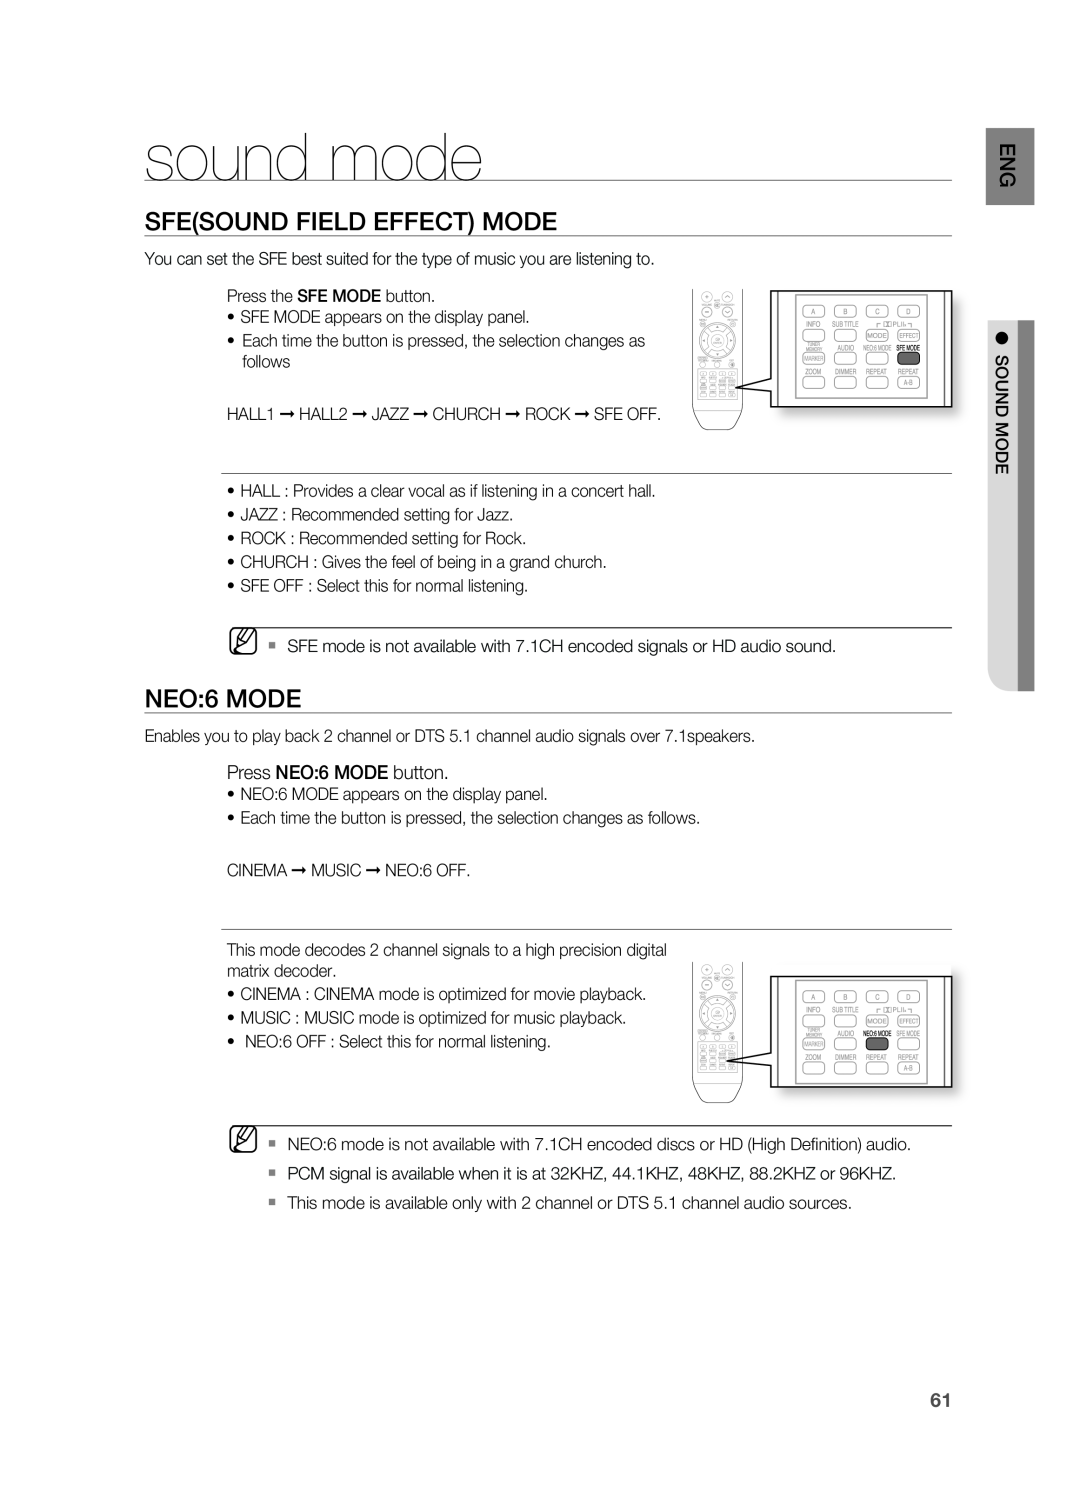 Samsung HT-BD2 manual sound mode, Sfesound Field Effect Mode, NEO:6 MODE 